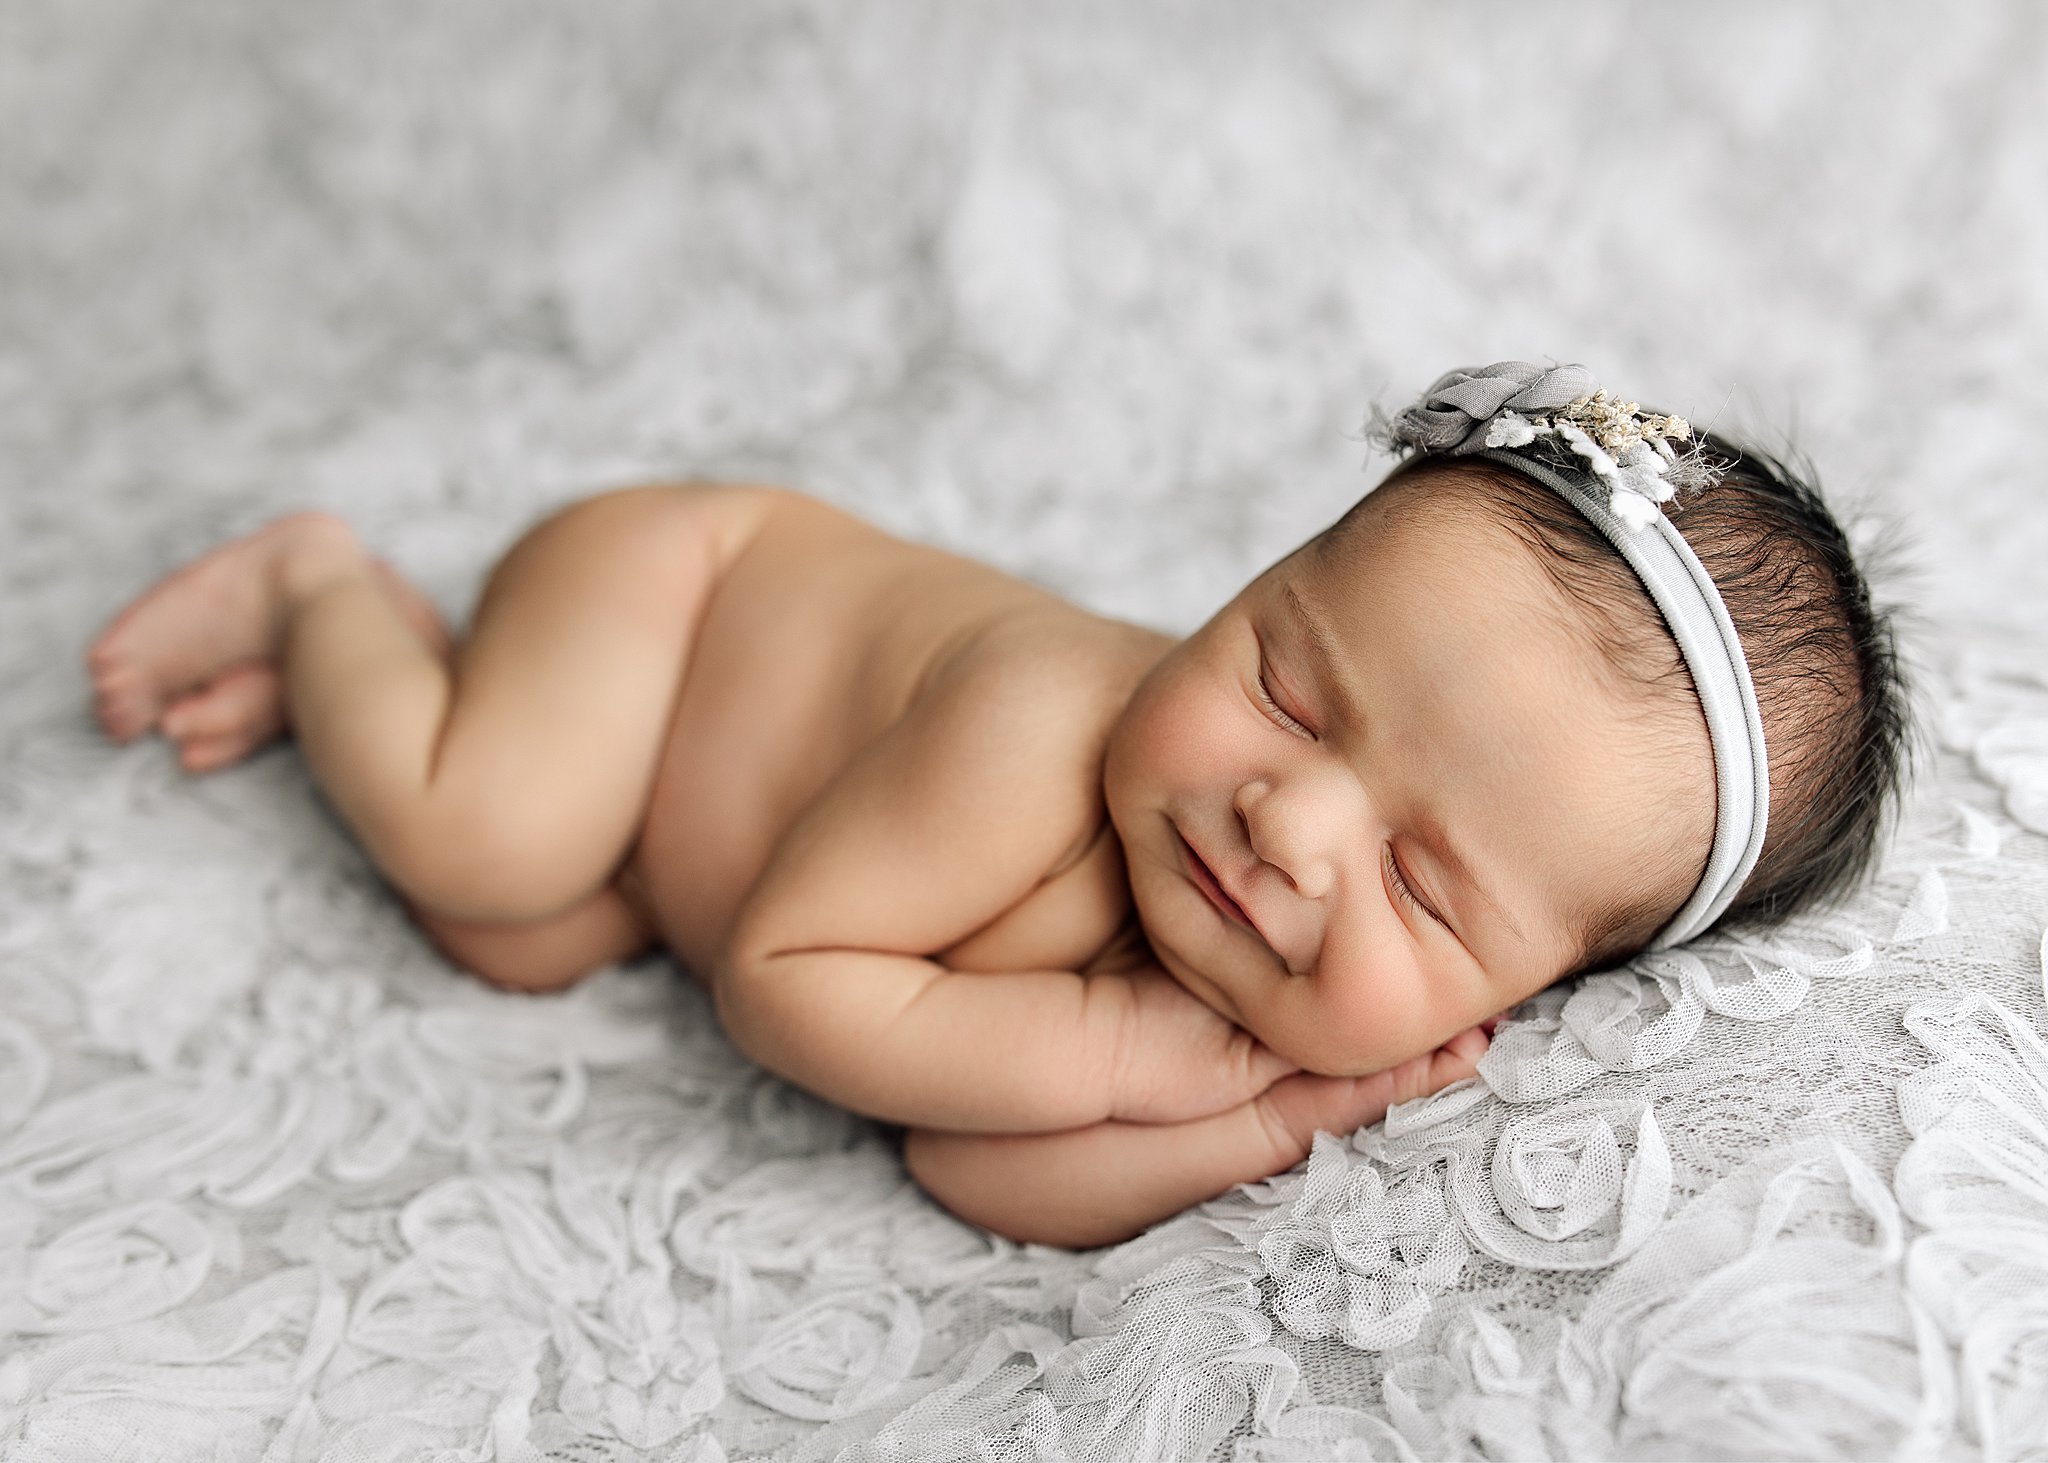 Newborn girl posed on gray fabric smiling